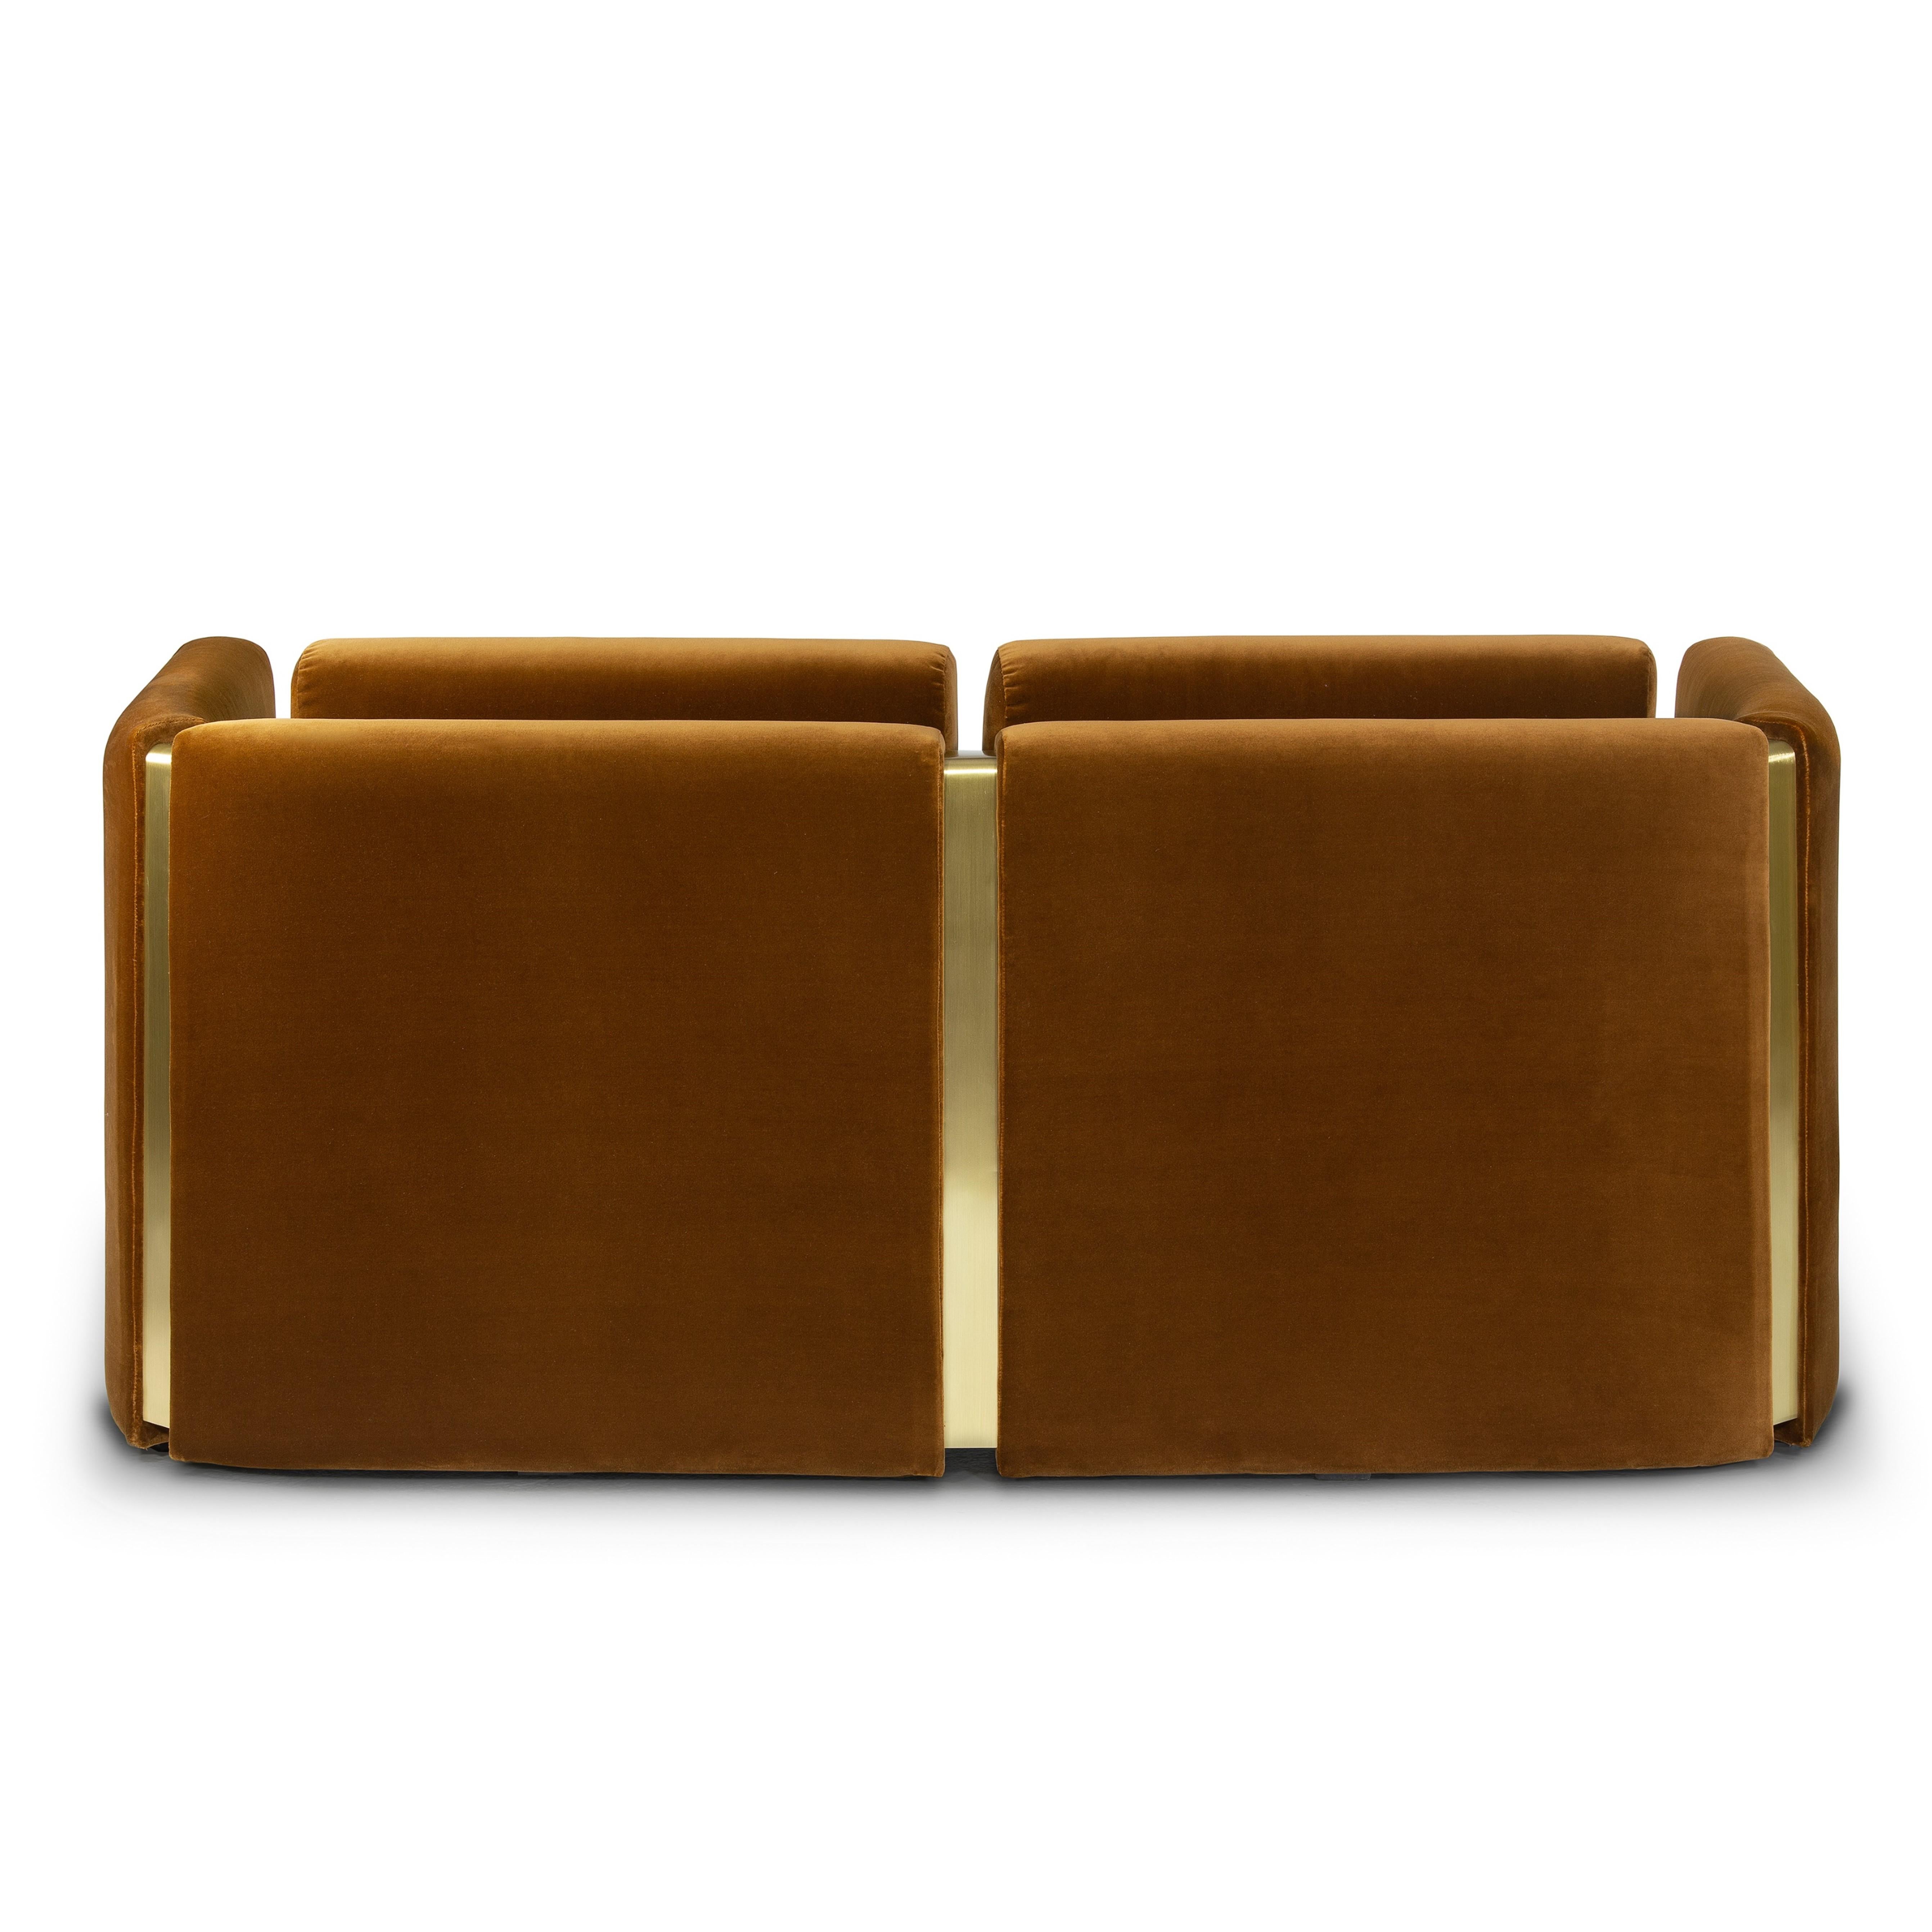 Brushed Fernandine Two Seat Sofa, Brass & COM, Insidherland by Joana Santos Barbosa For Sale